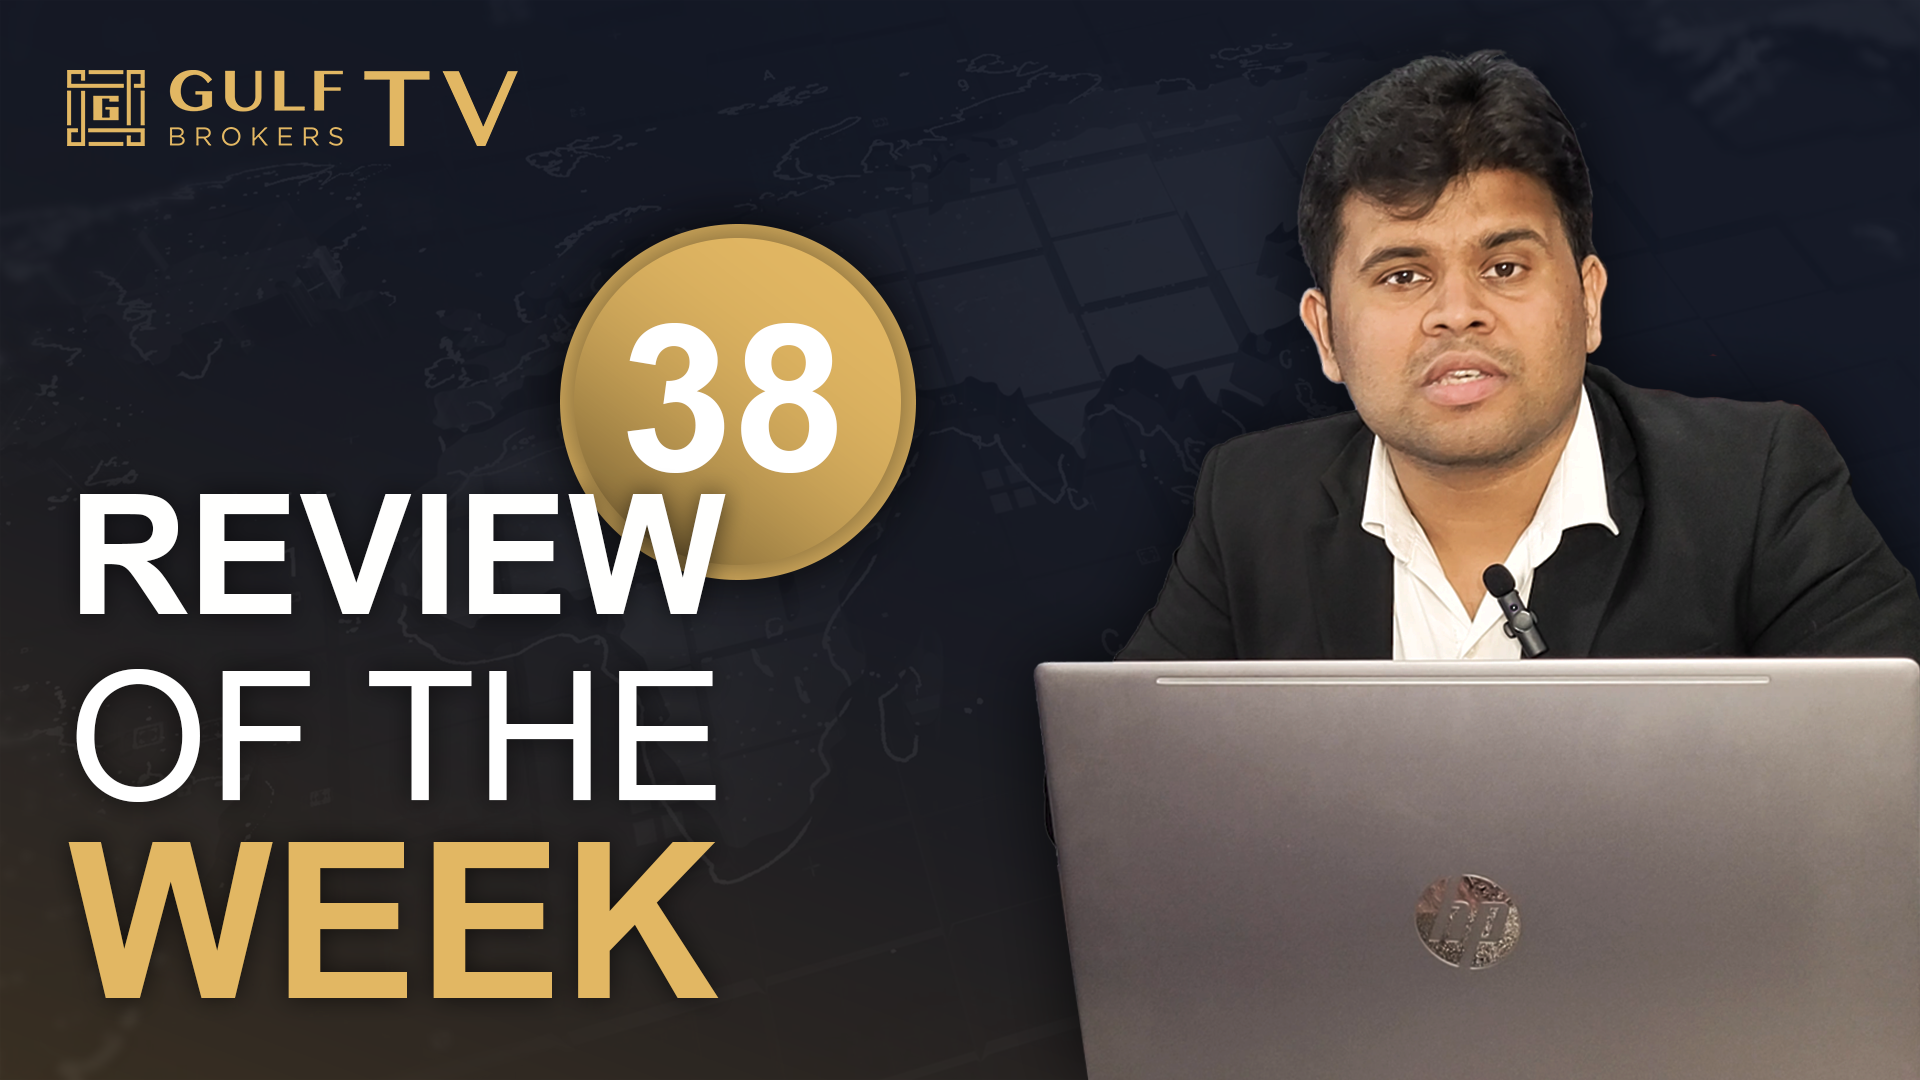 Gulfbrokers | Gulf Brokers | Review of the week 38 | Syam KP